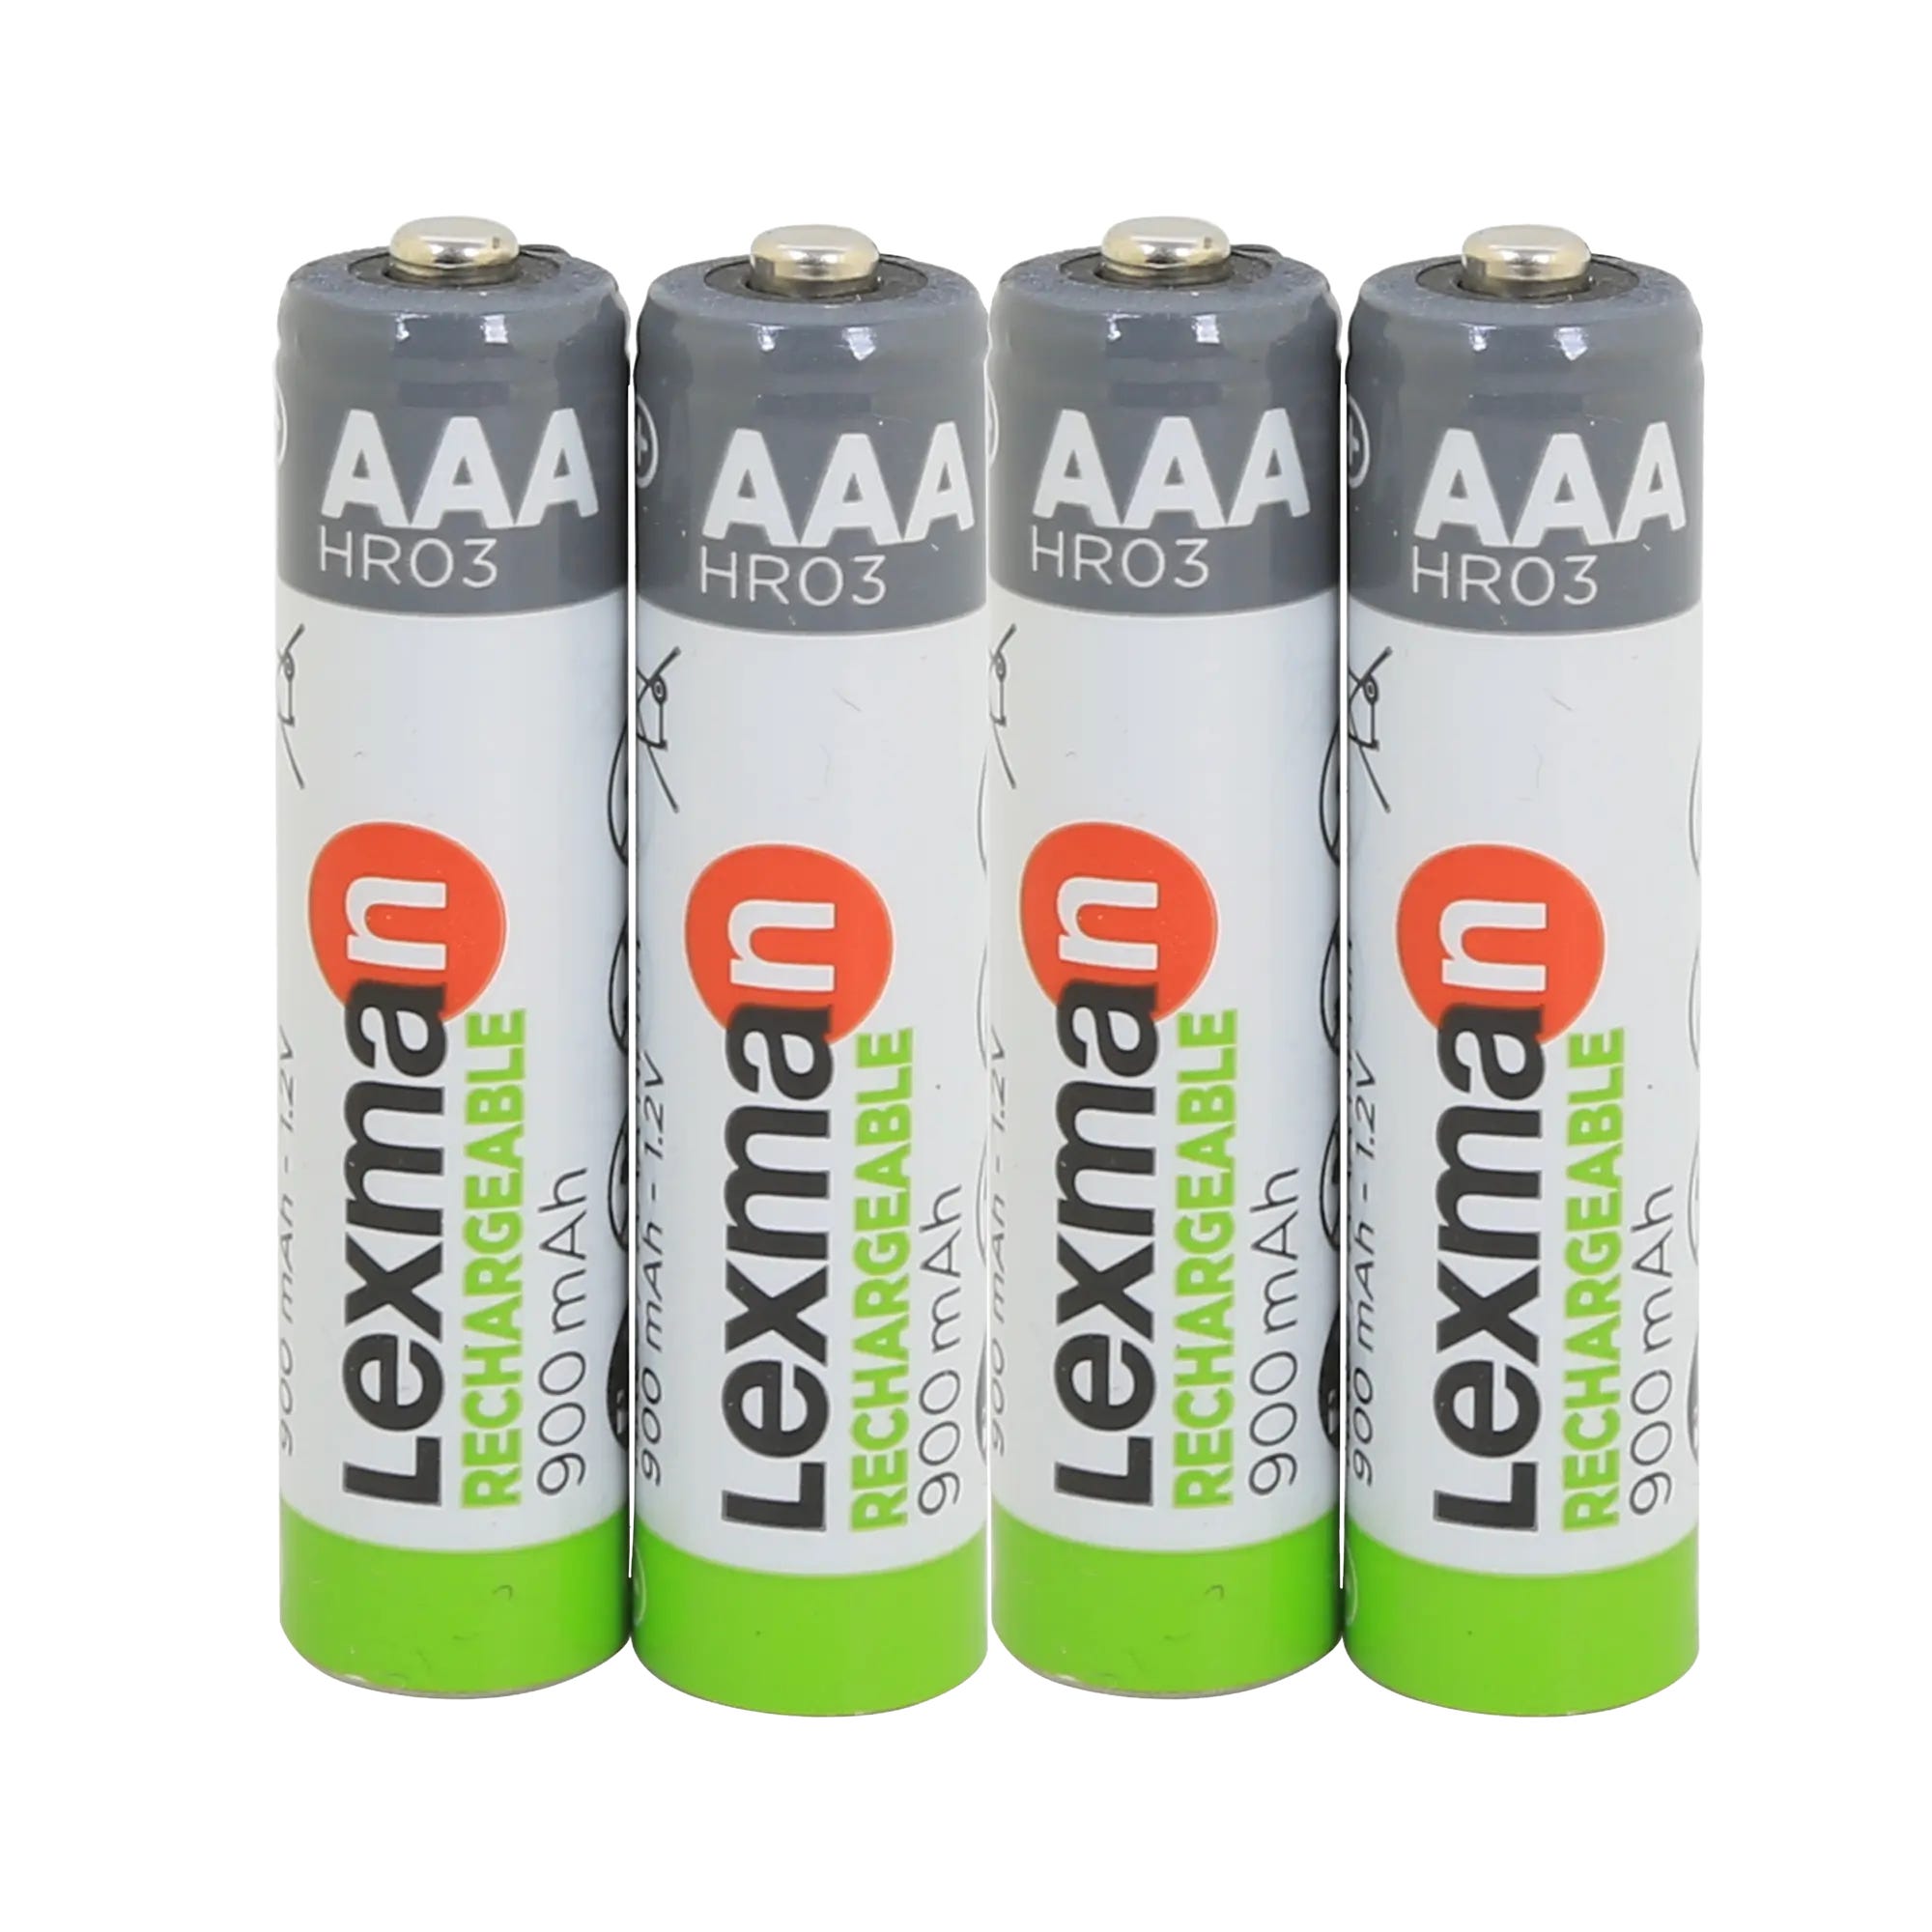 Piles AAA rechargeables Duracell (lot de 4 piles), 900 mAh, NiMH